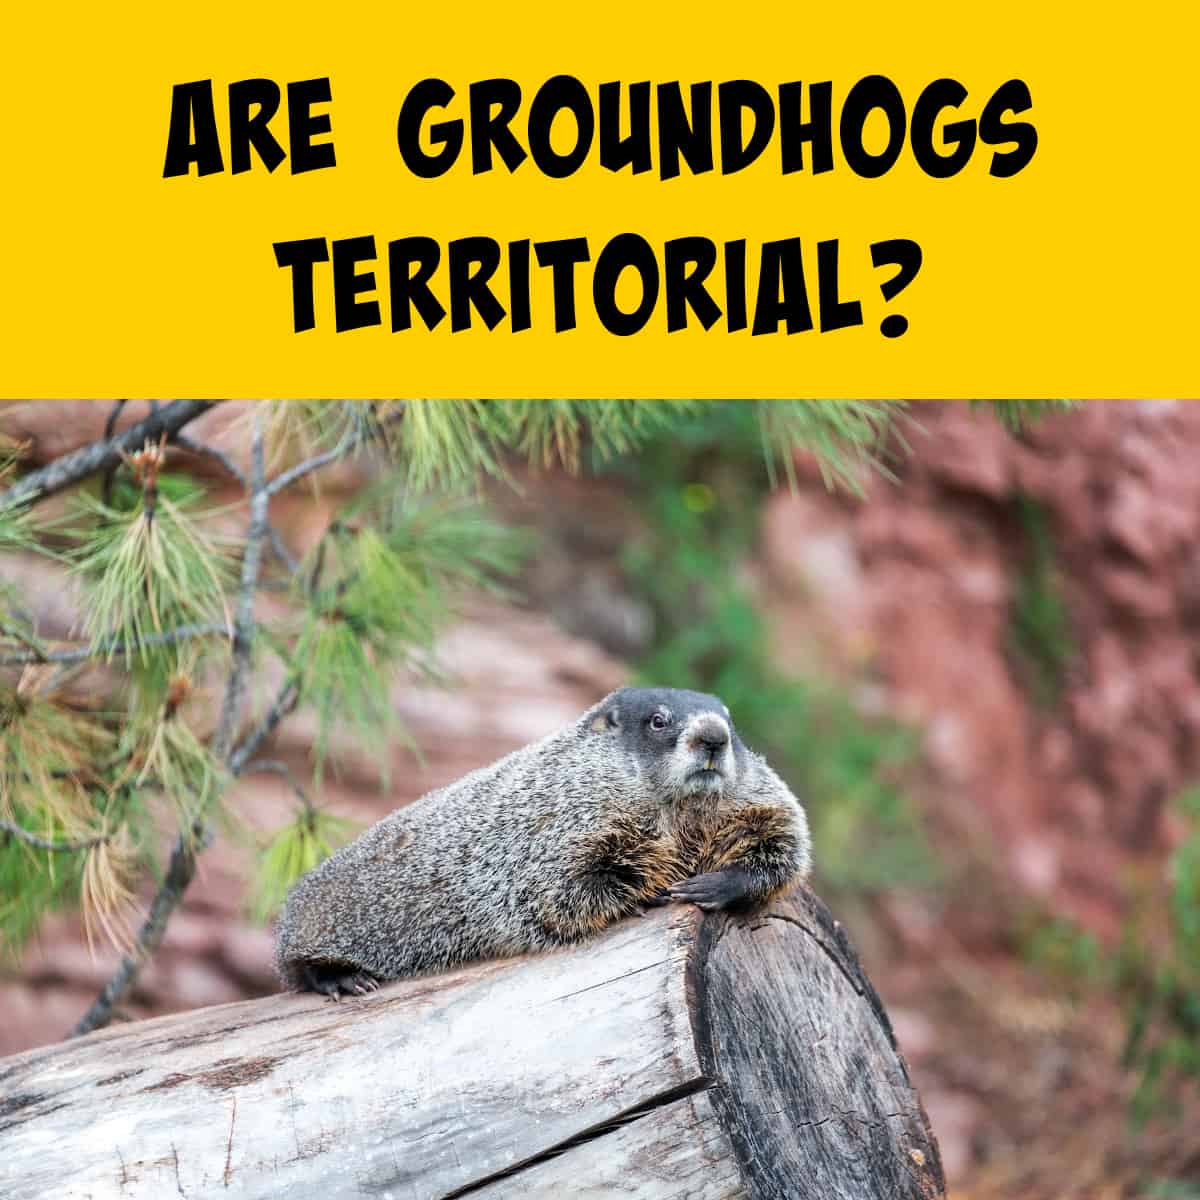 Groundhog on a log defending his territory